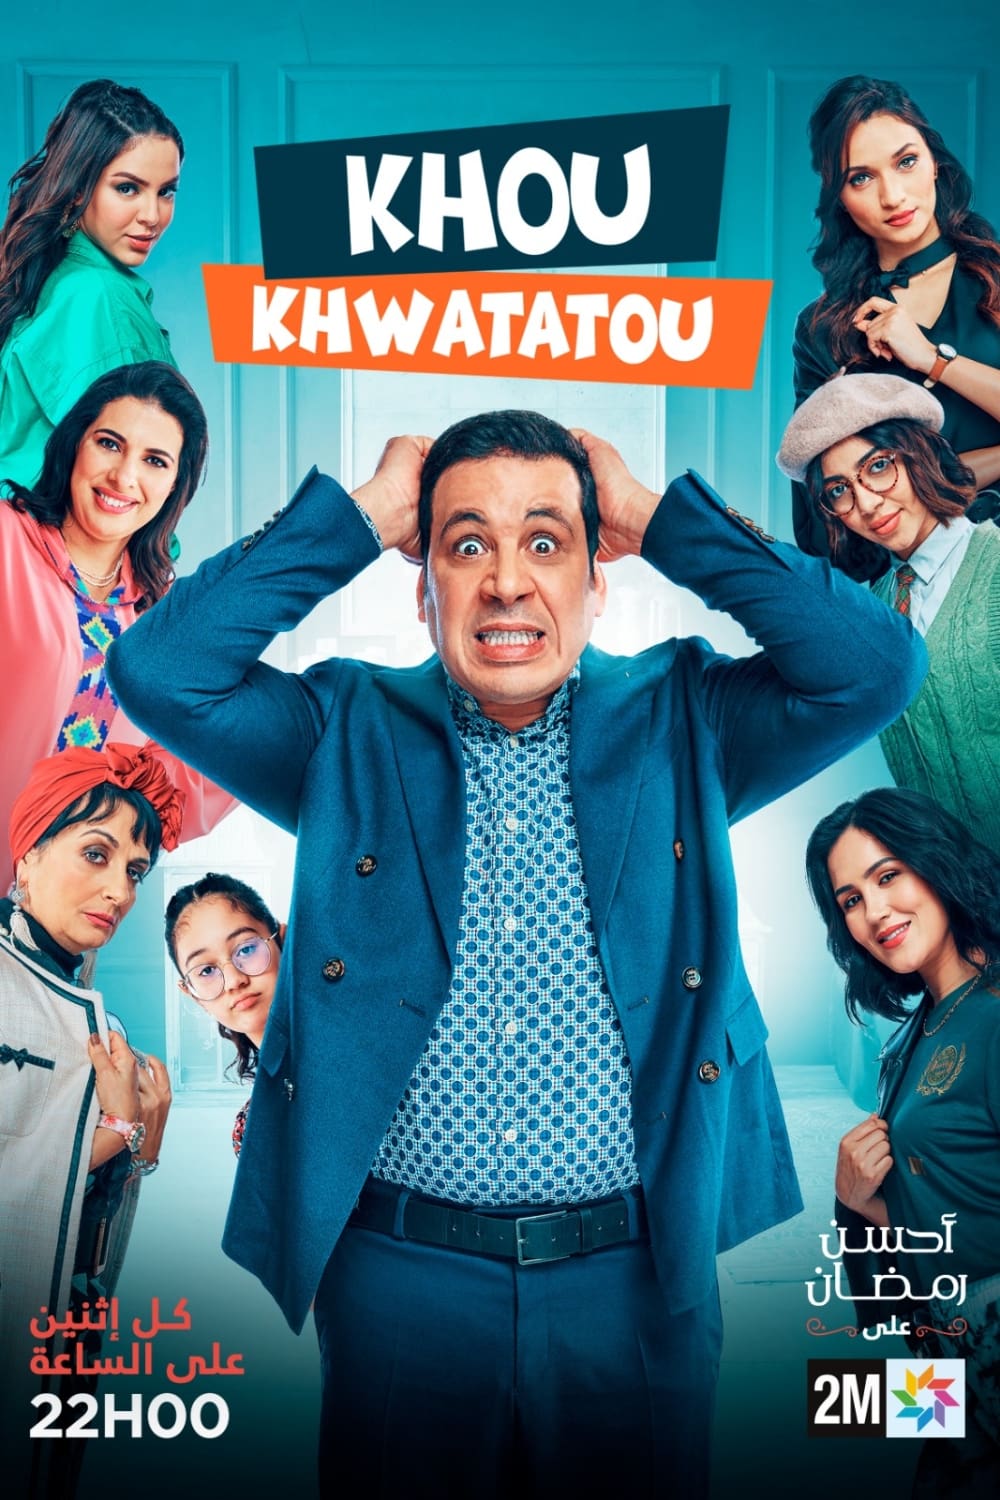 TV ratings for Khou Khwatatou (خو خواتاتو) in the United States. 2M TV series